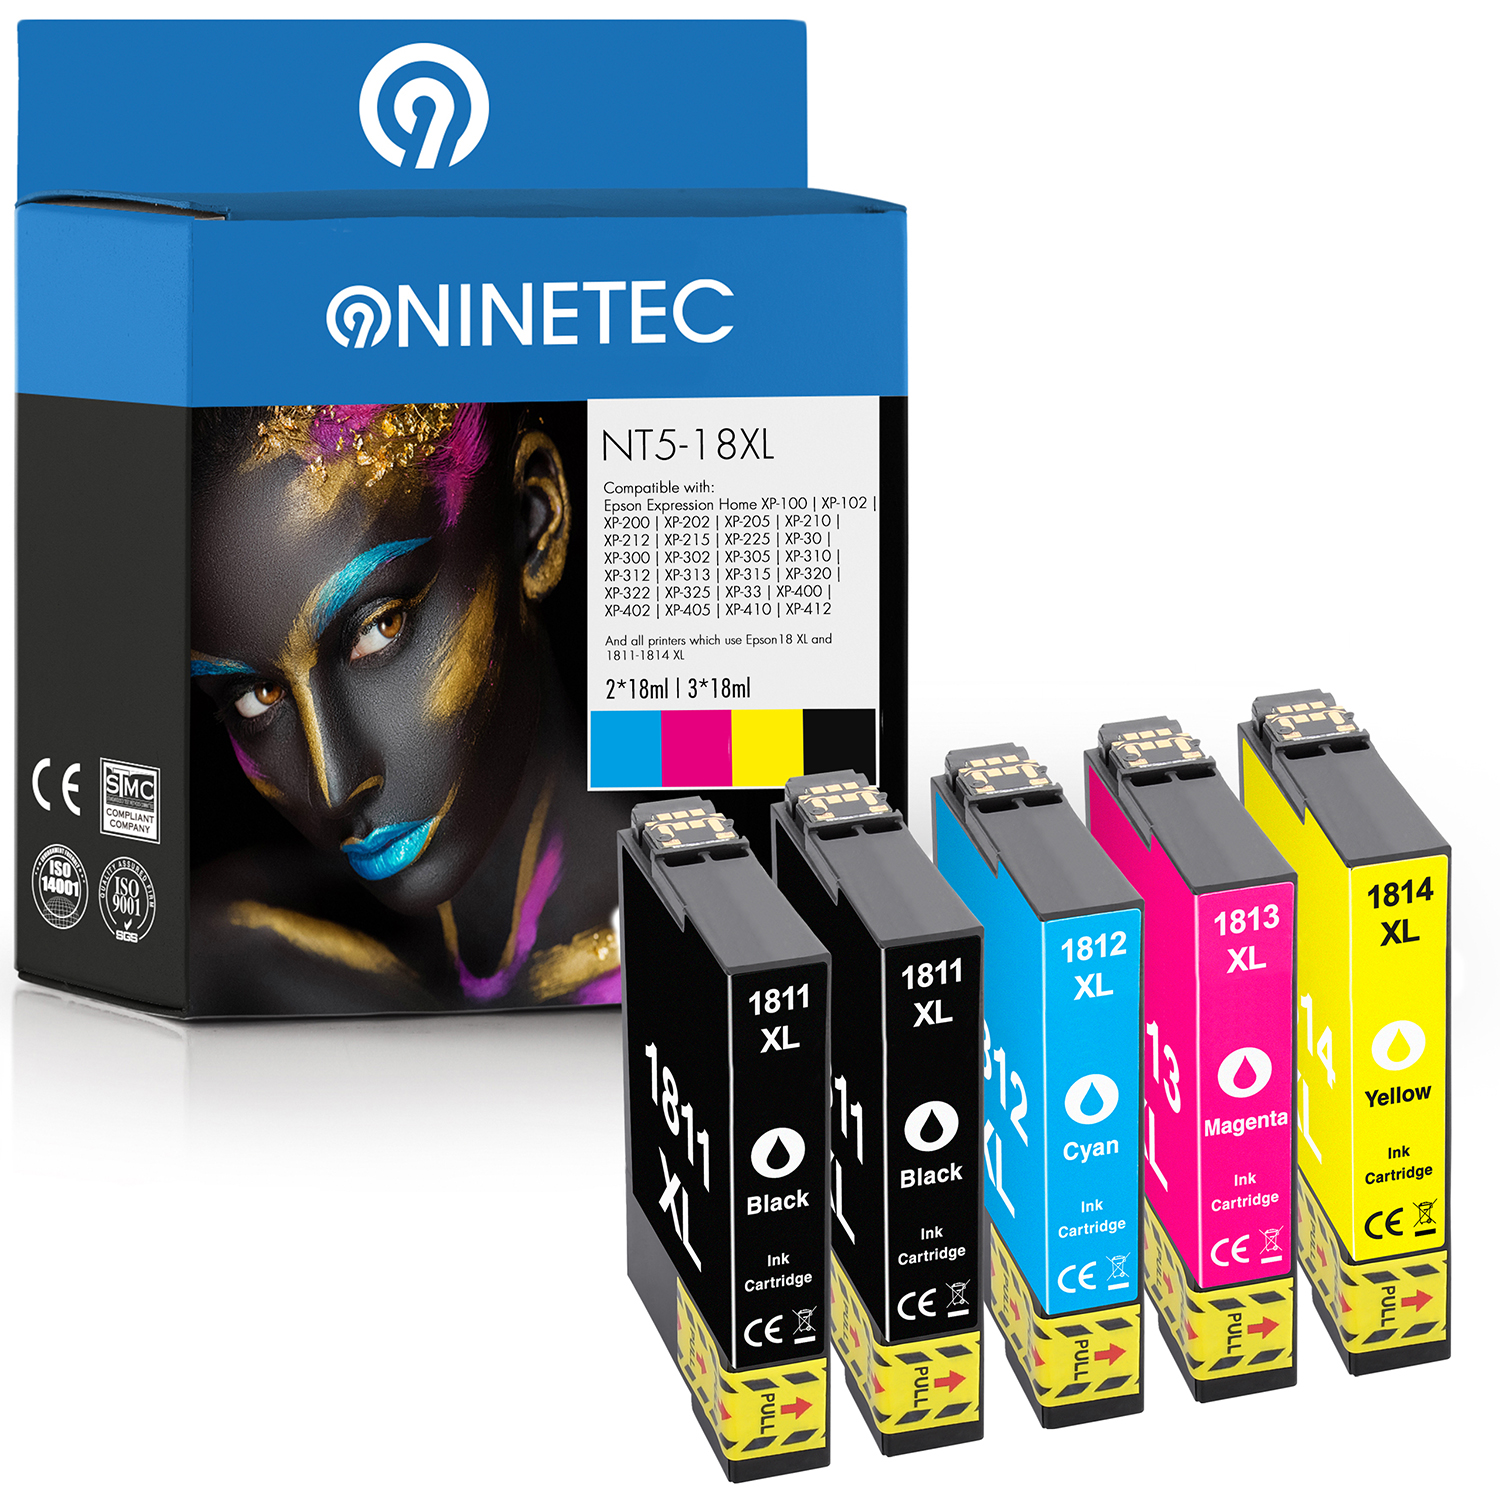 NINETEC 5er Set cyan, 13 yellow Epson T1811-T1814 black, ersetzt T 18164510) (C Tintenpatronen magenta